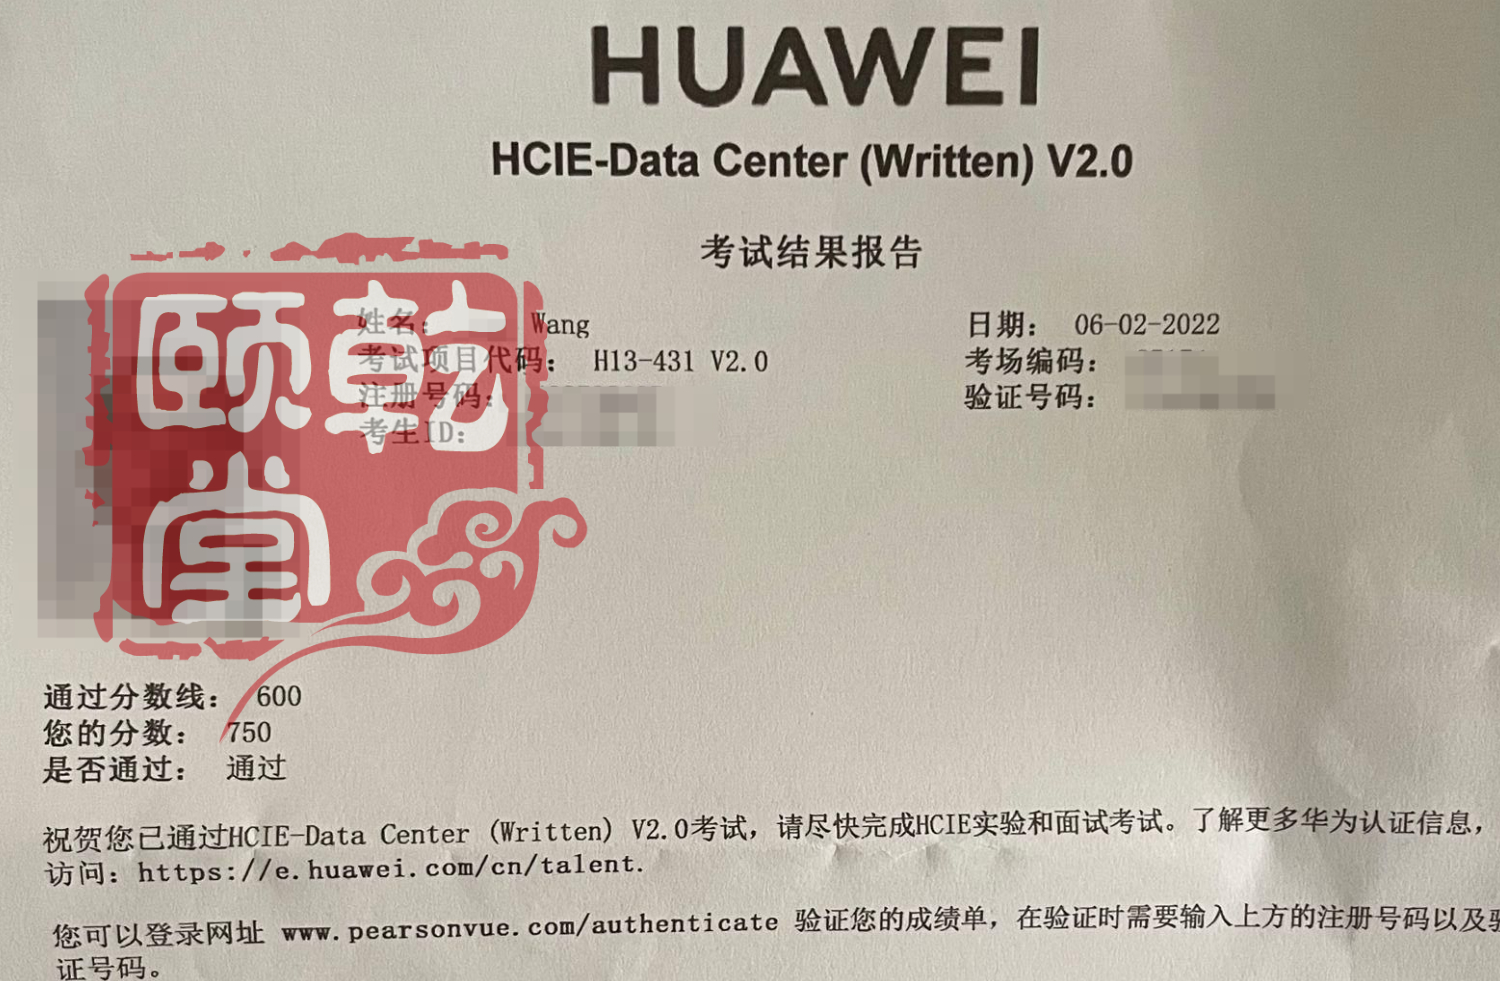 HCIE DC 王 6.2.jpg